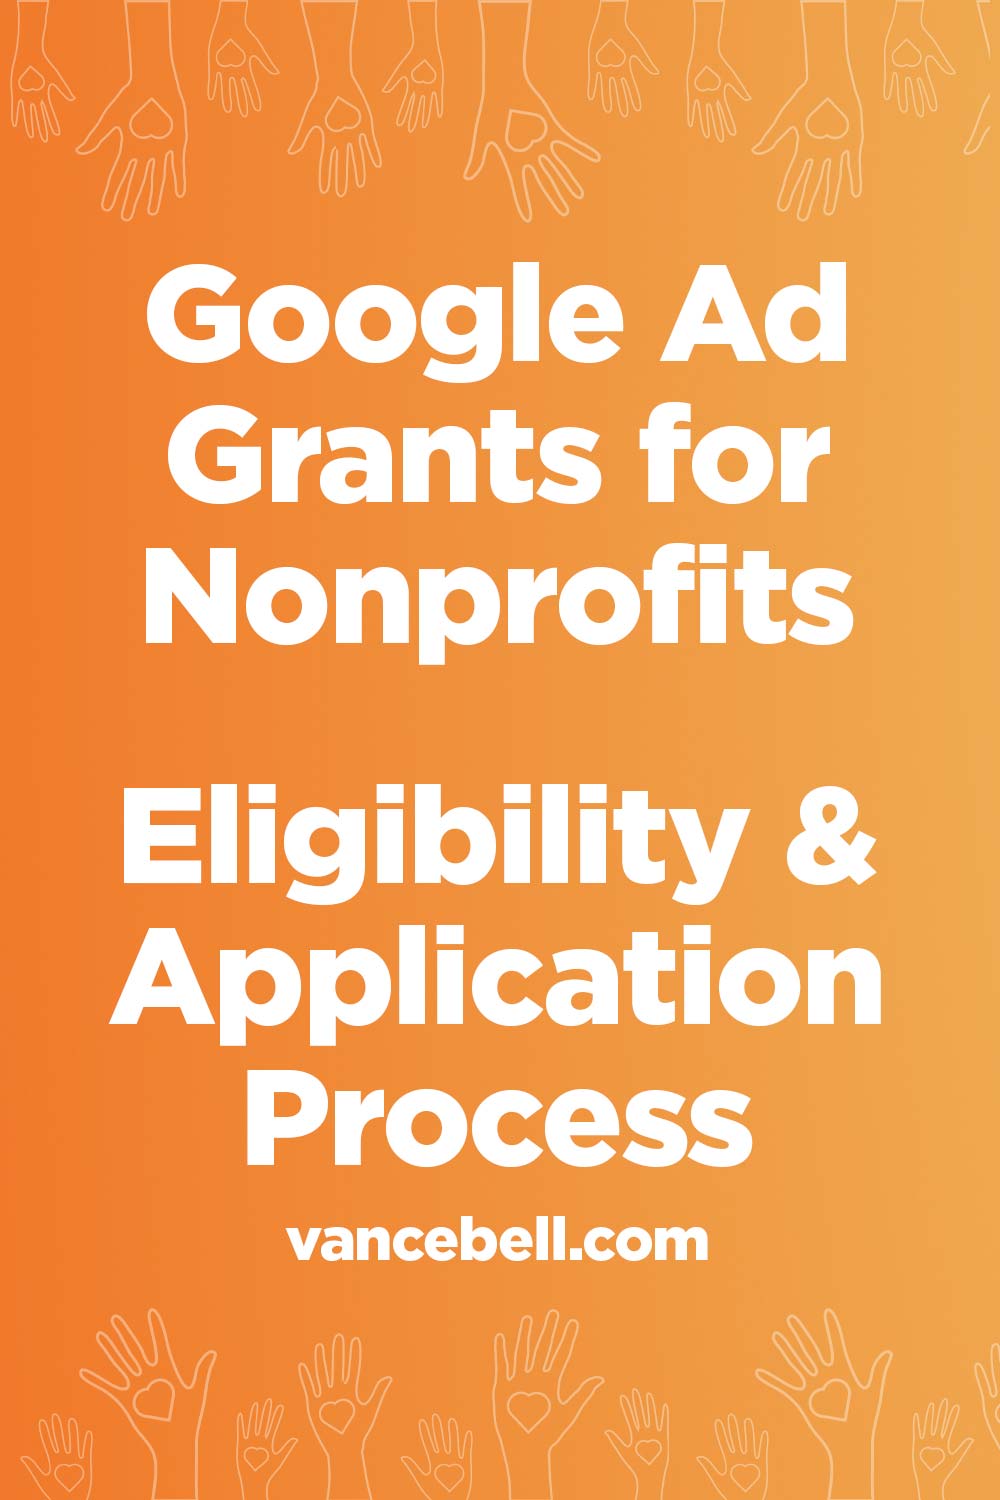 Google Ad Grants for Nonprofits - Eligibility & Application Process